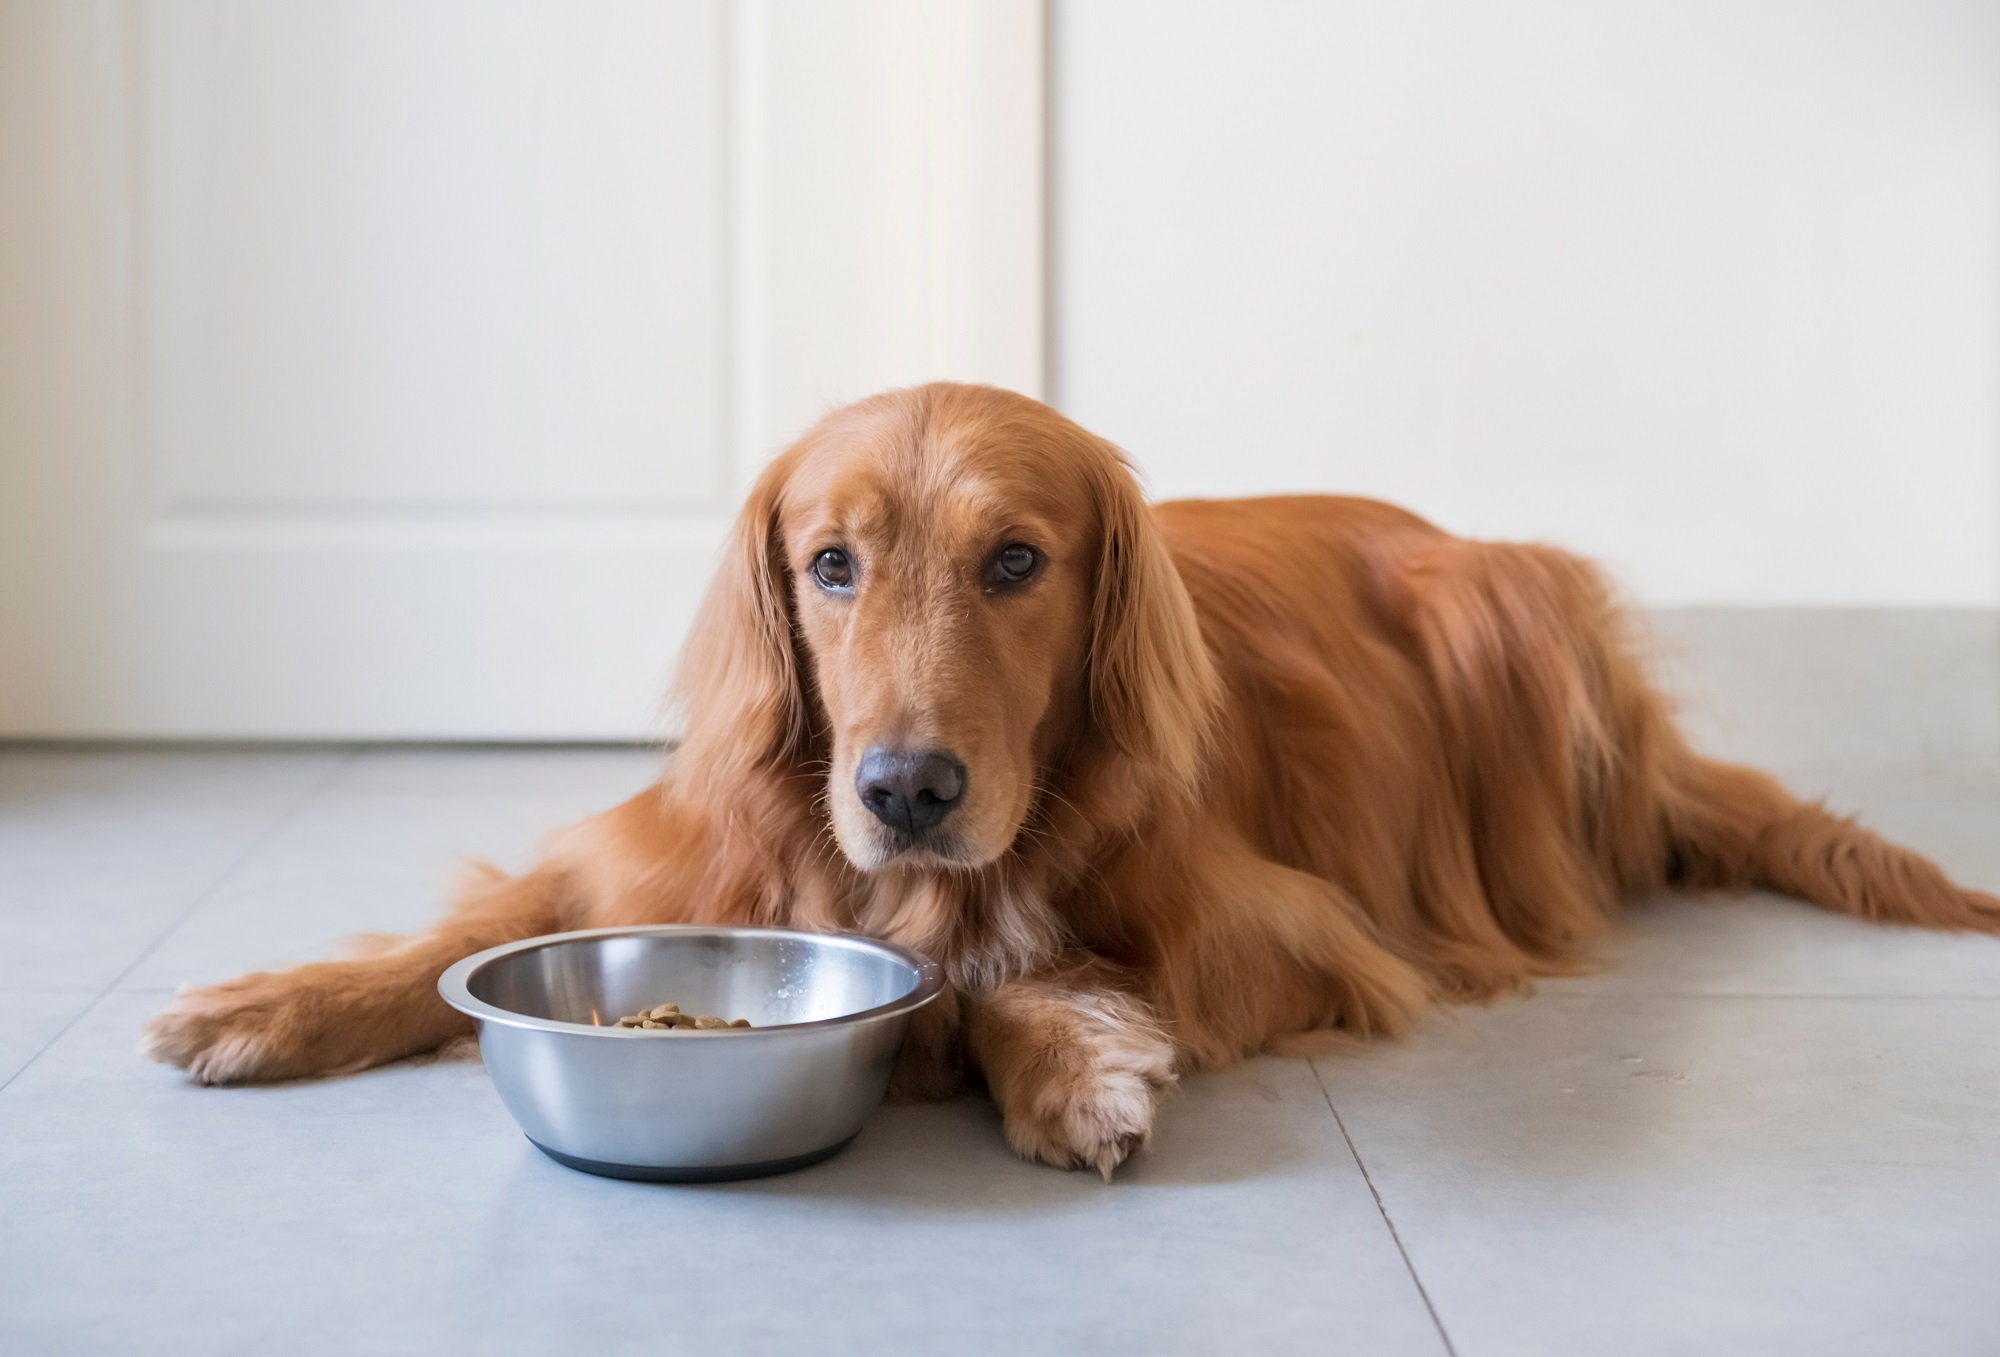 6 Best Dog Food for Golden Retrievers